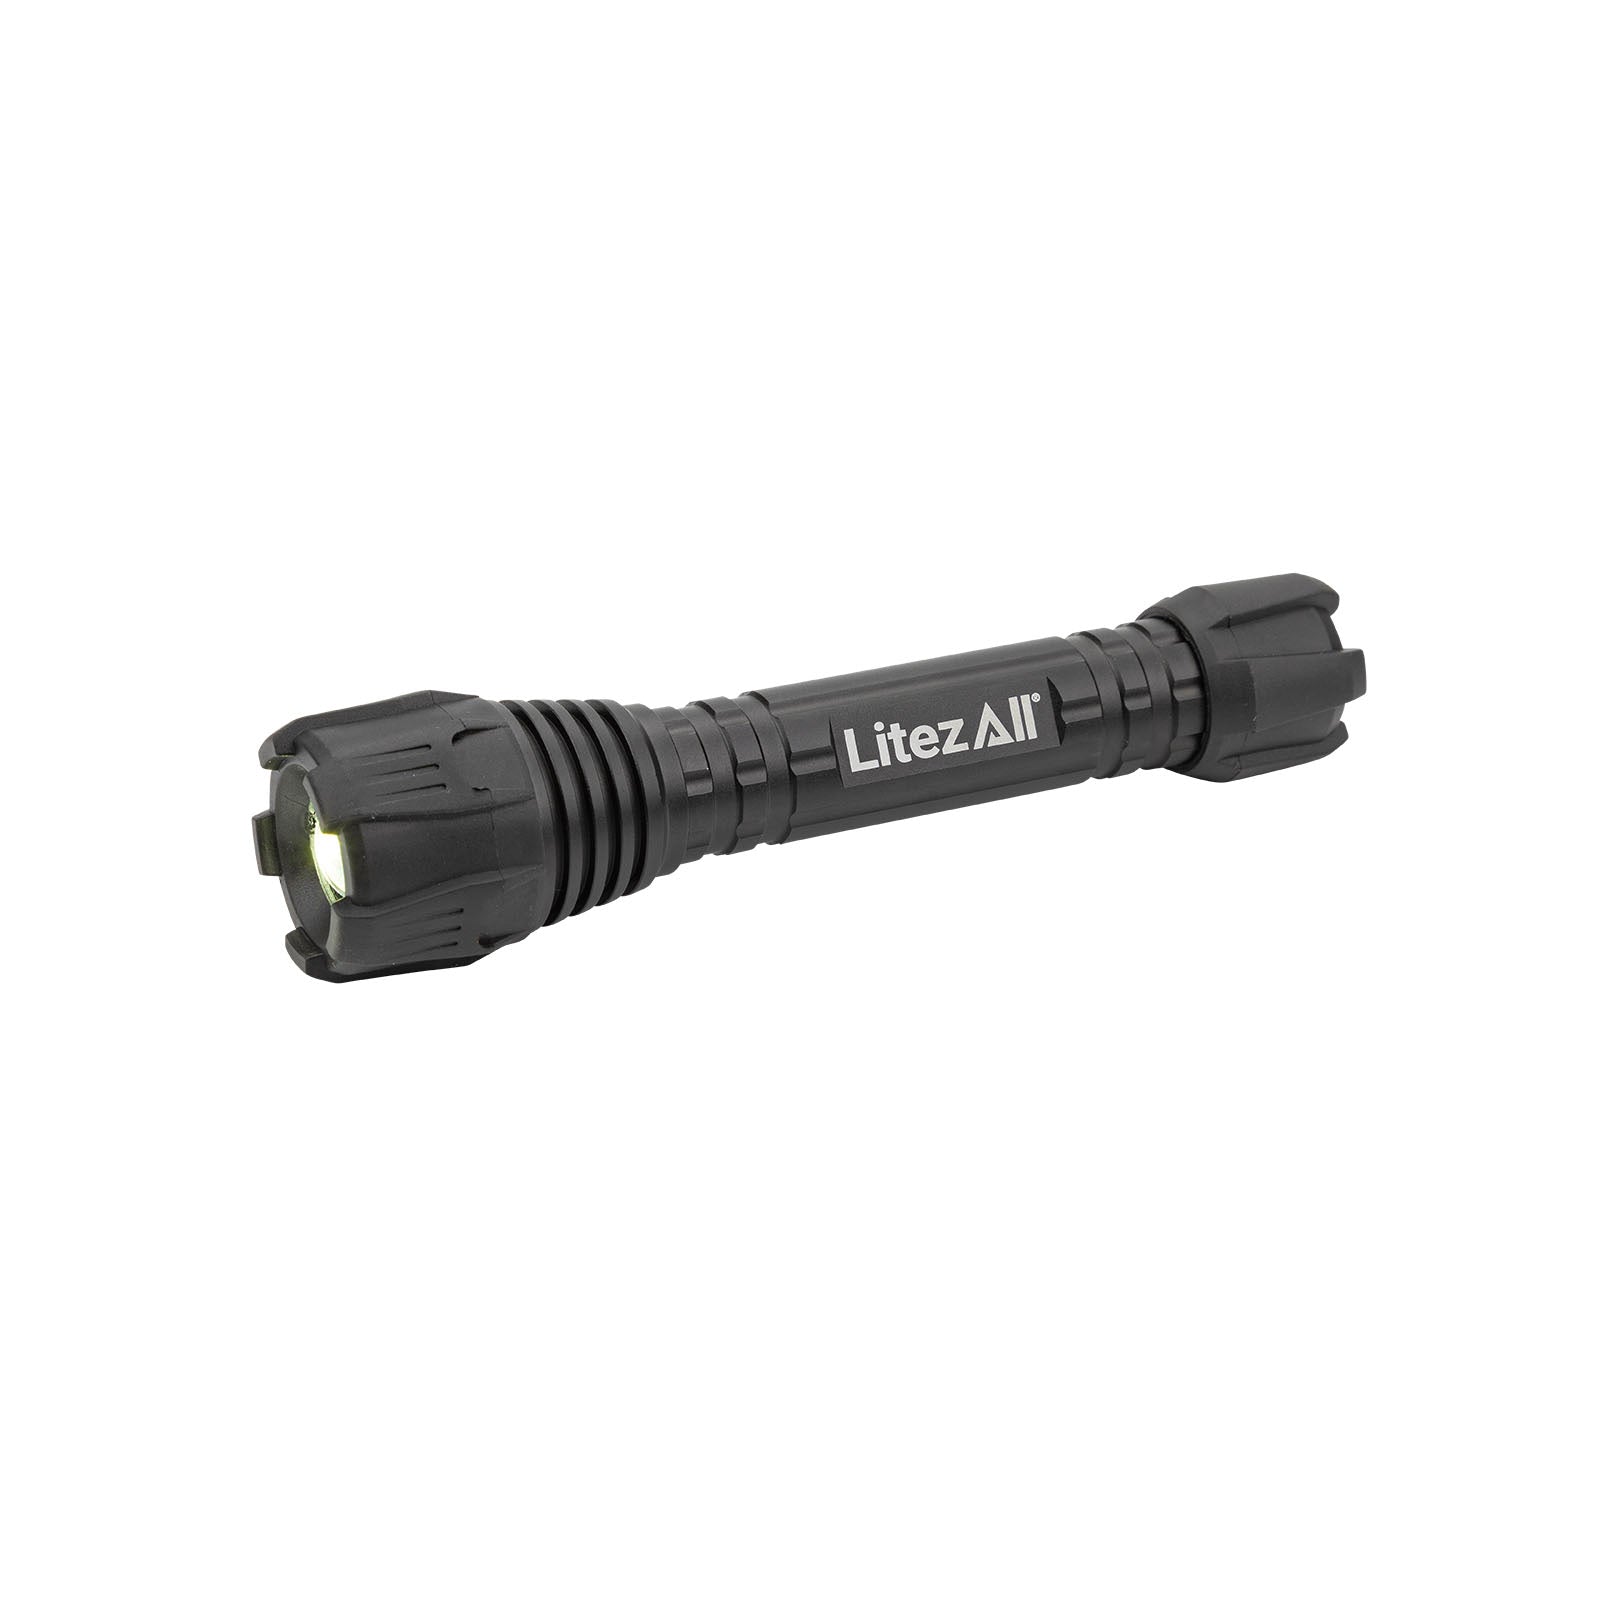 LitezAll Nearly Invincible 250 Lumen Tactical Flashlight - LitezAll - Tactical Flashlights - 7